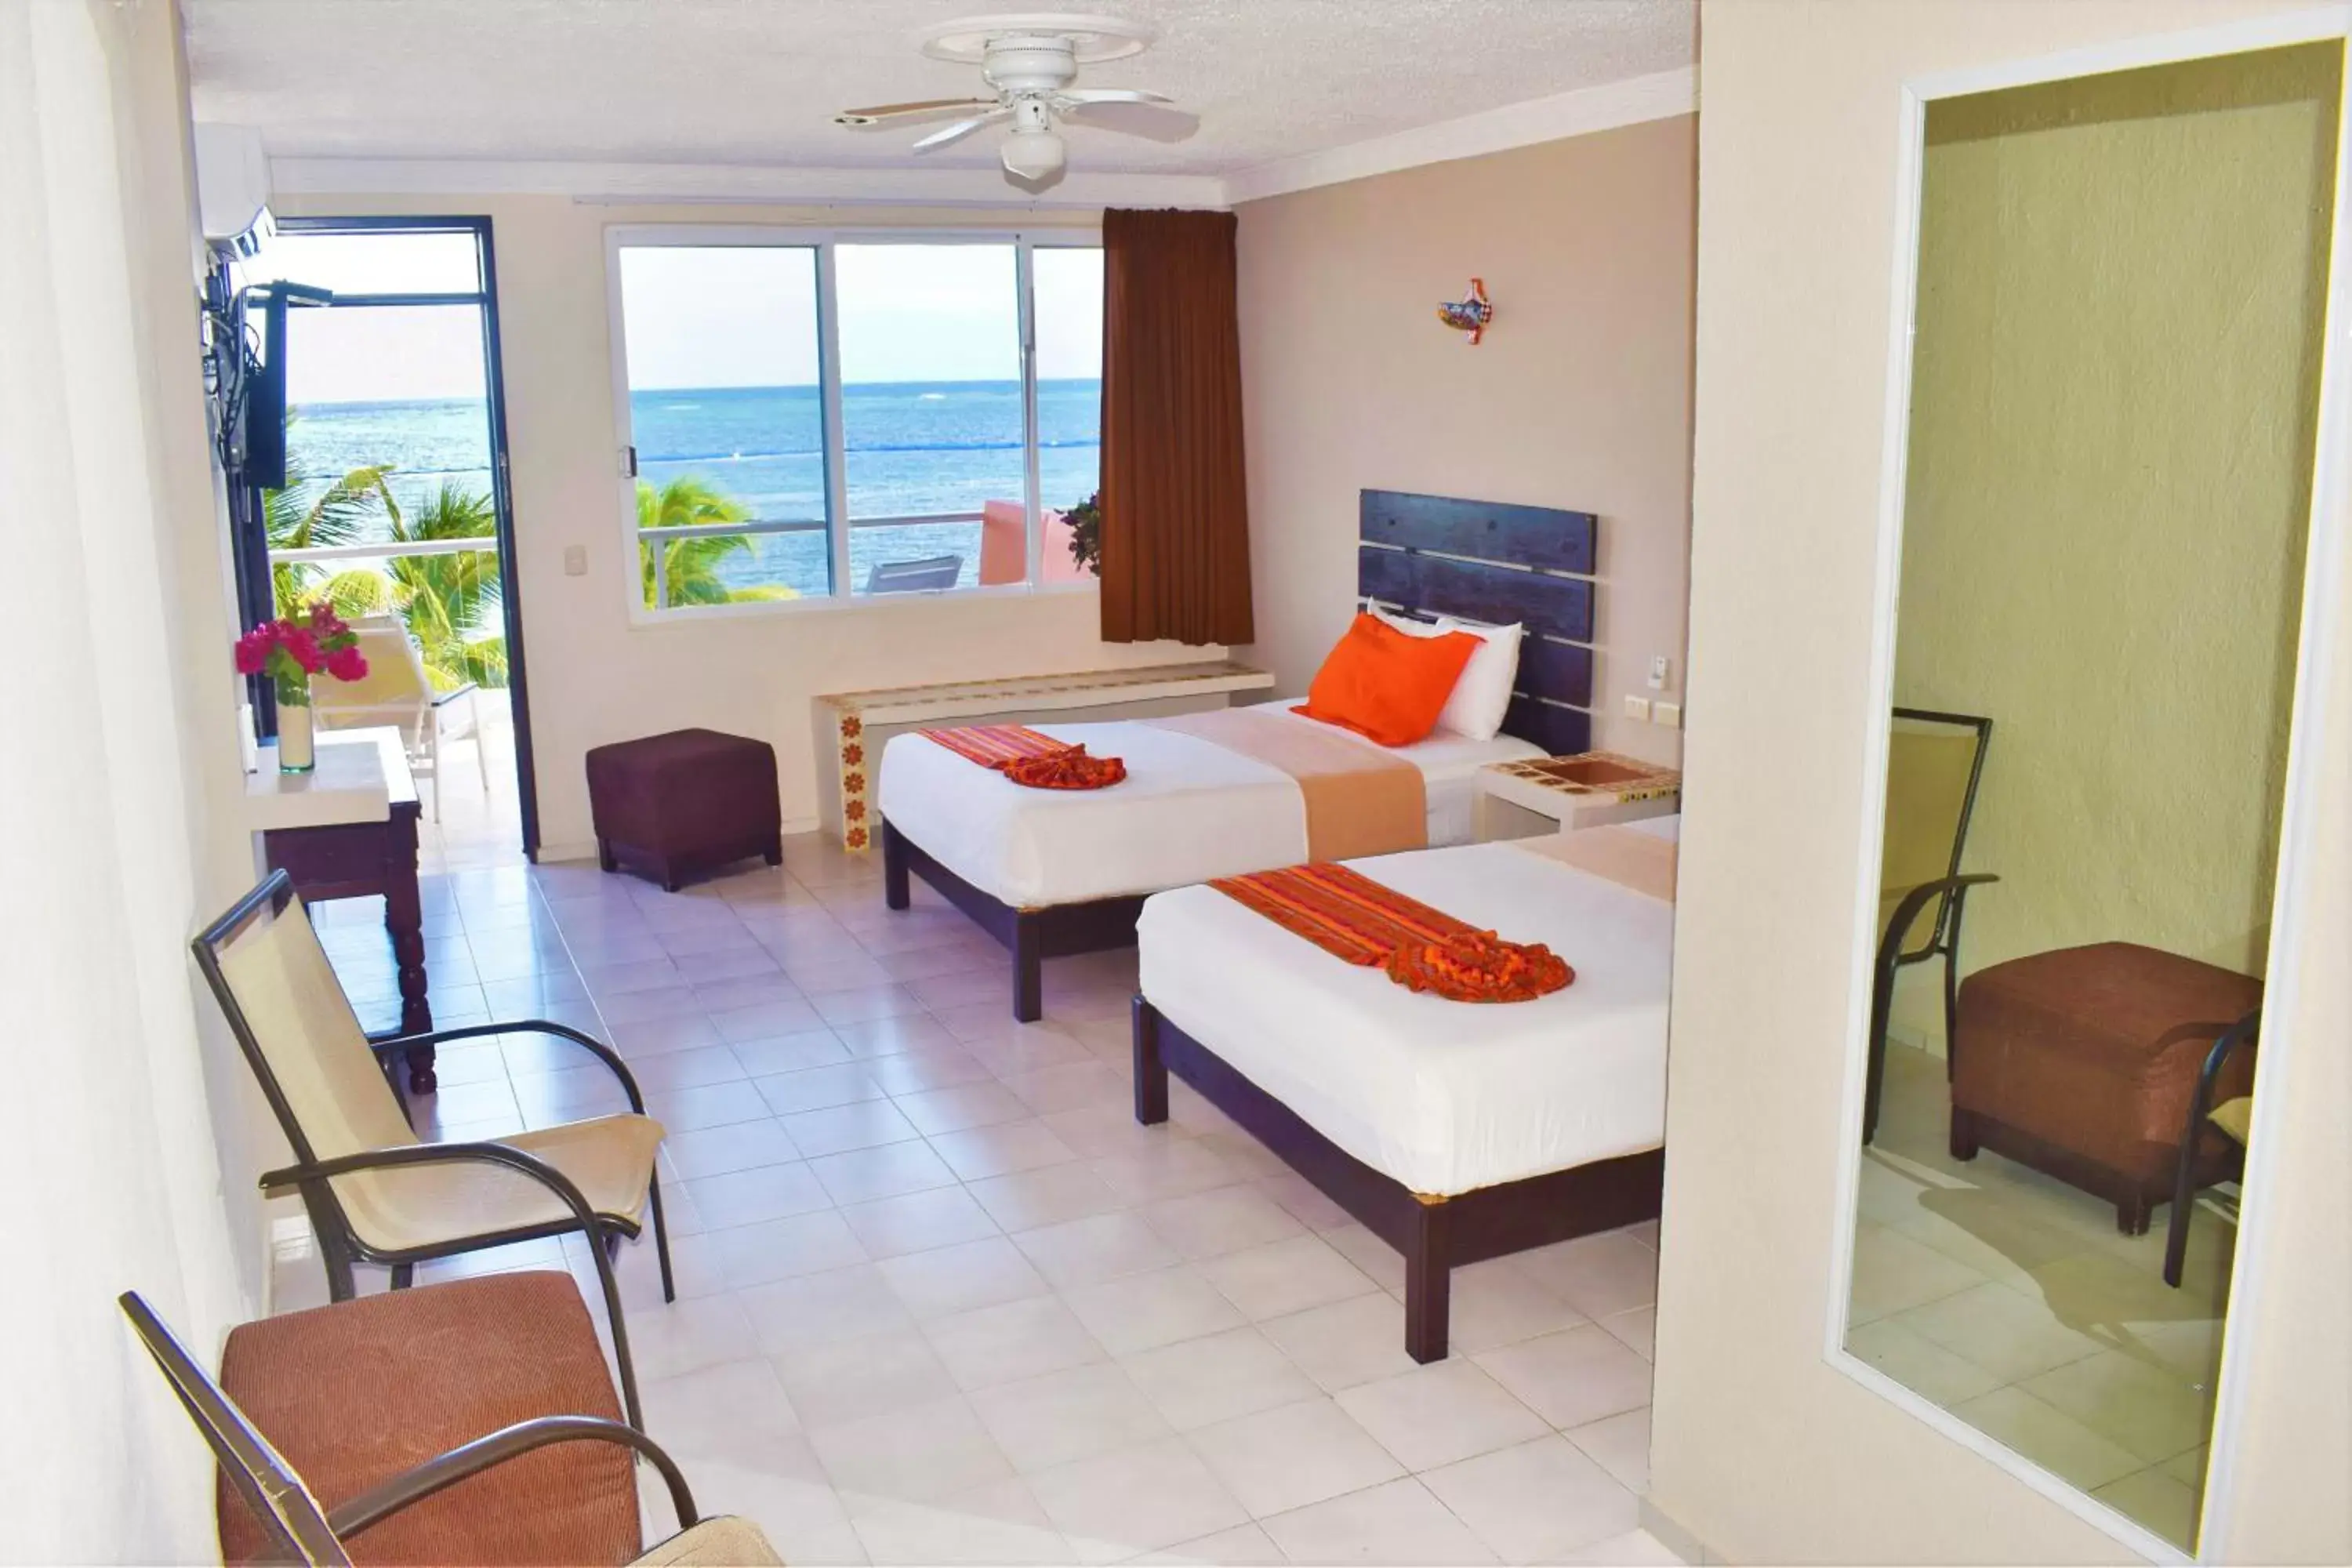 Photo of the whole room in Hacienda Morelos Beachfront Hotel